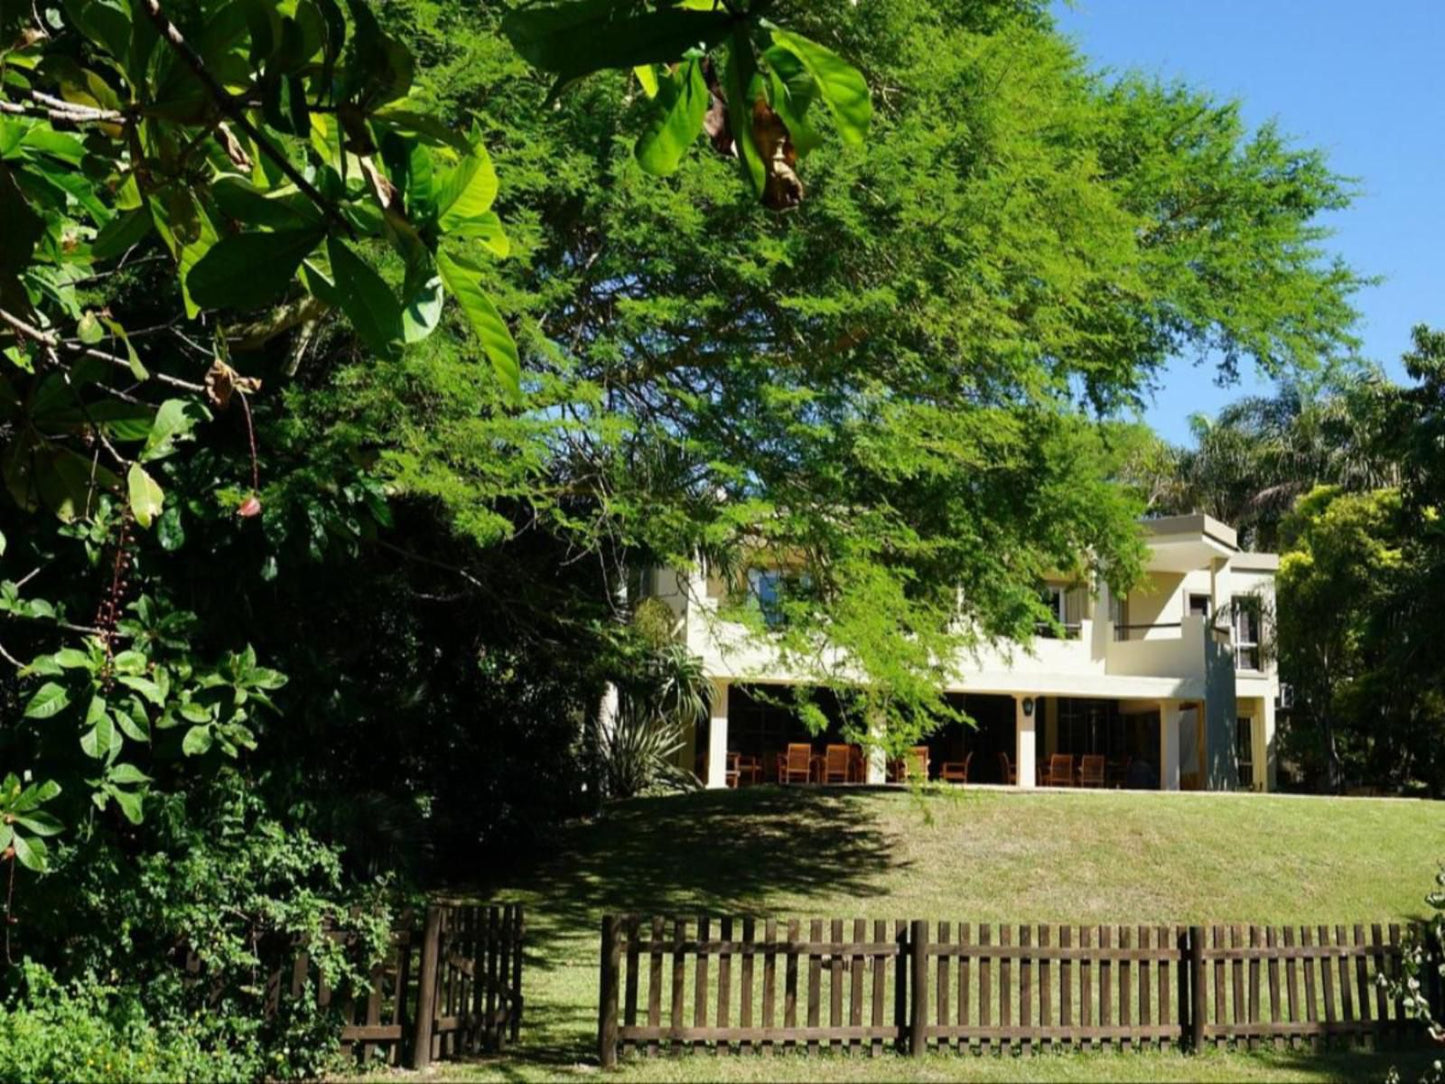 Eden River Lodge Scottburgh Kwazulu Natal South Africa House, Building, Architecture